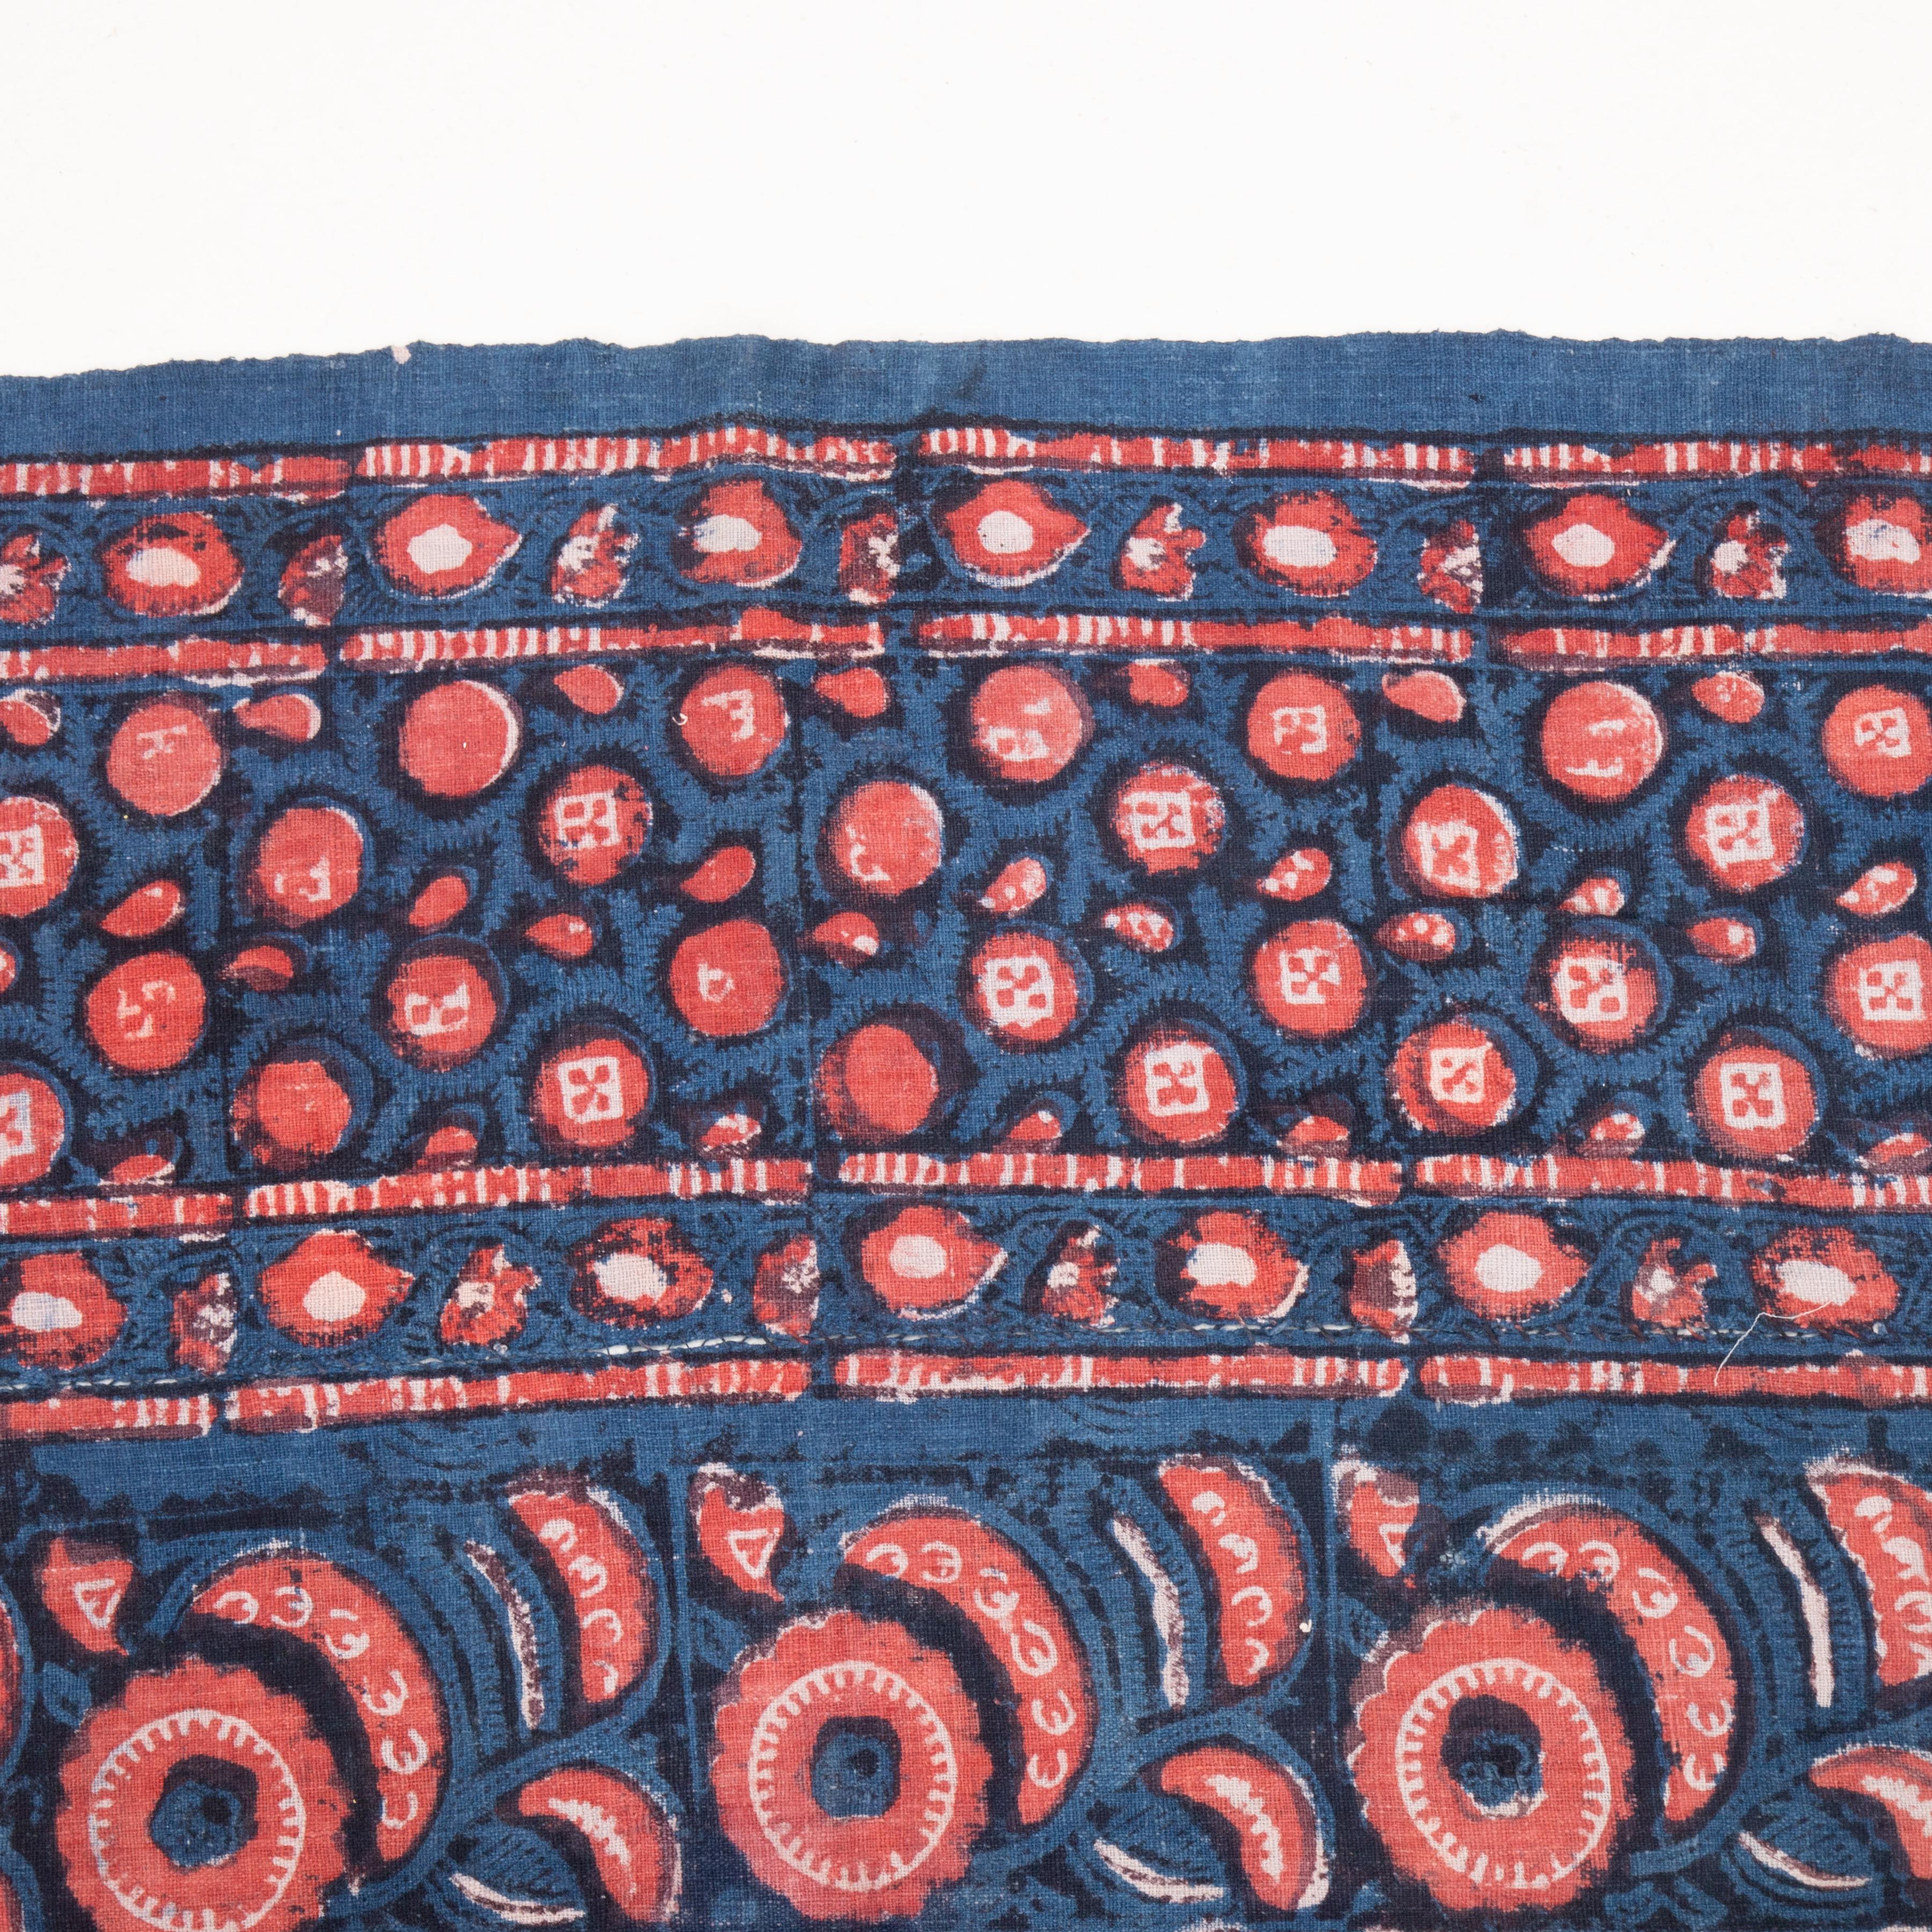 Antique Block Printed Indigo Quilt Top, Uzbekistan, Early 20th  For Sale 3